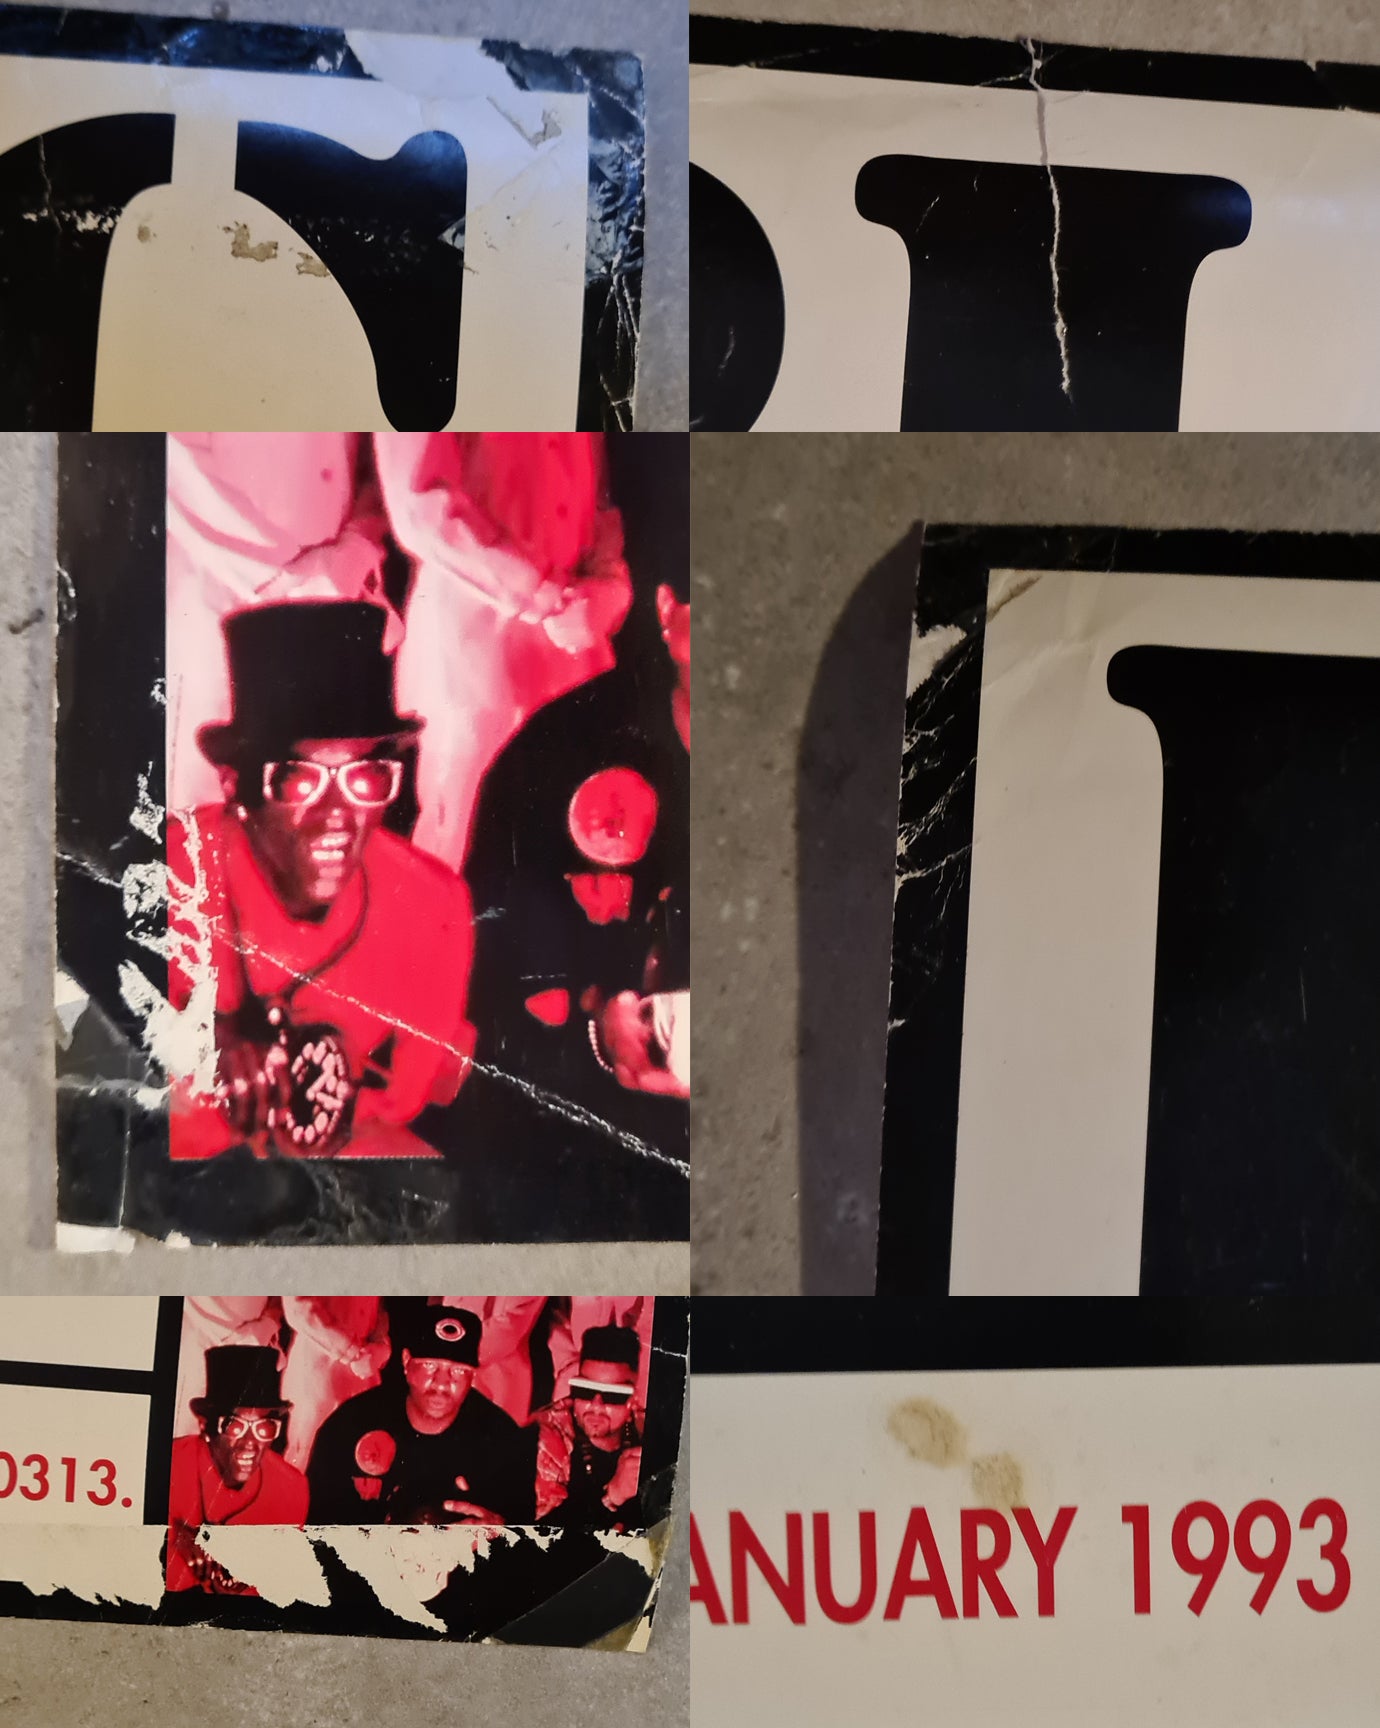 Public Enemy 'Live in Hong Kong' Original Poster 1993